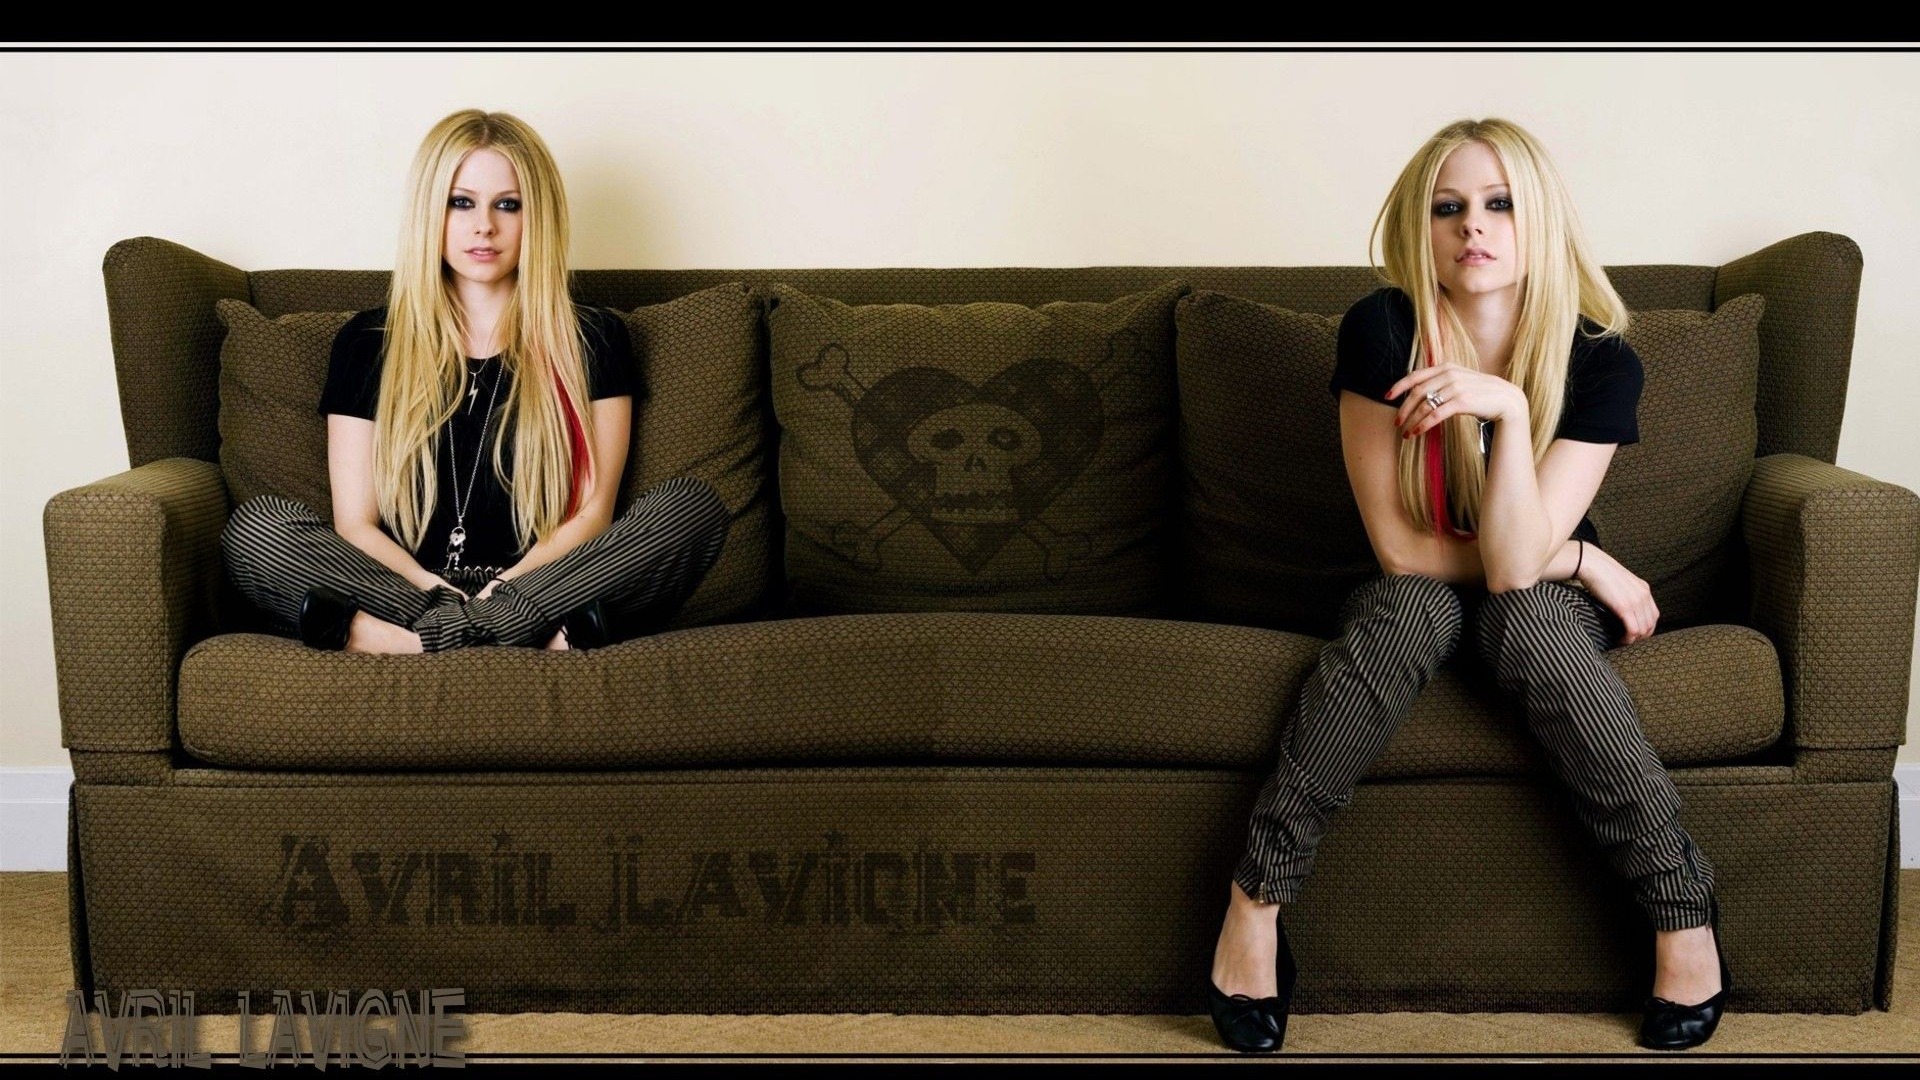 Avril Lavigne beautiful wallpaper #17 - 1920x1080